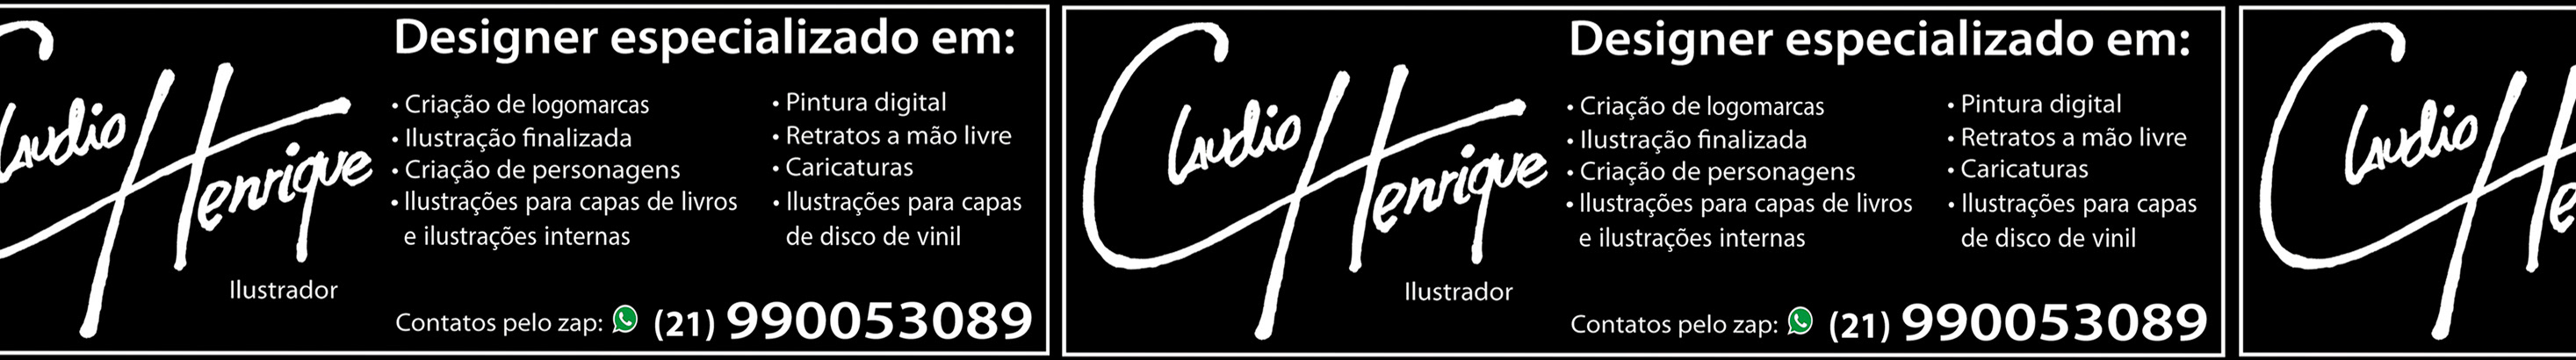 CLAUDIO HENRIQUE ILUSTRADOR profil başlığı